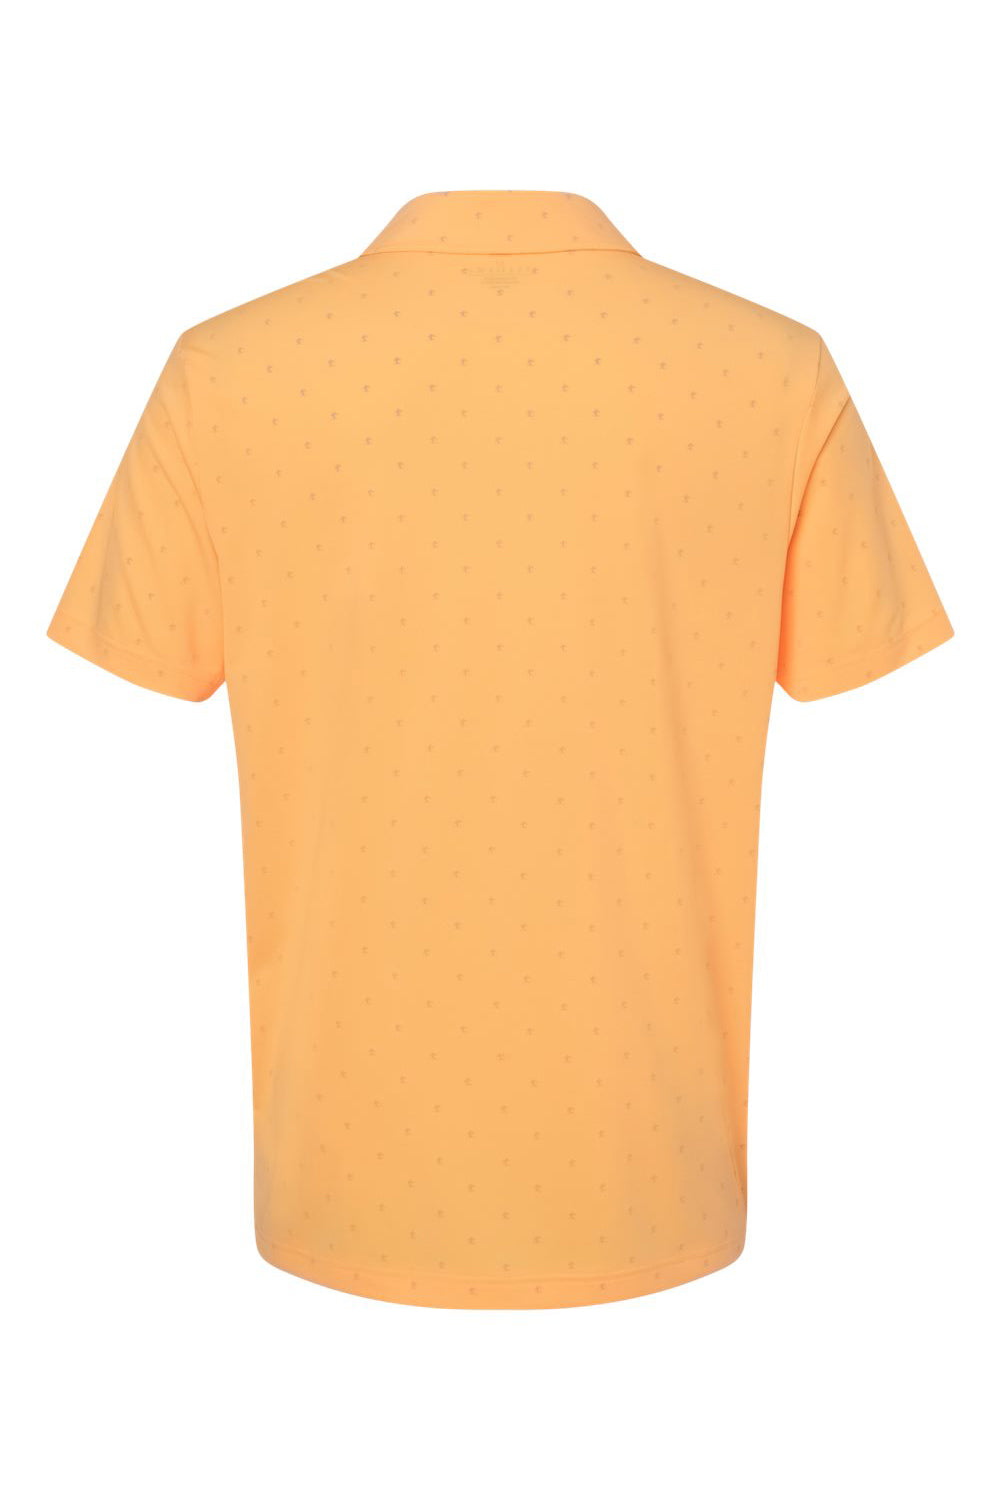 Adidas A574 Mens Pine Tree Short Sleeve Polo Shirt Acid Orange/Grey Flat Back